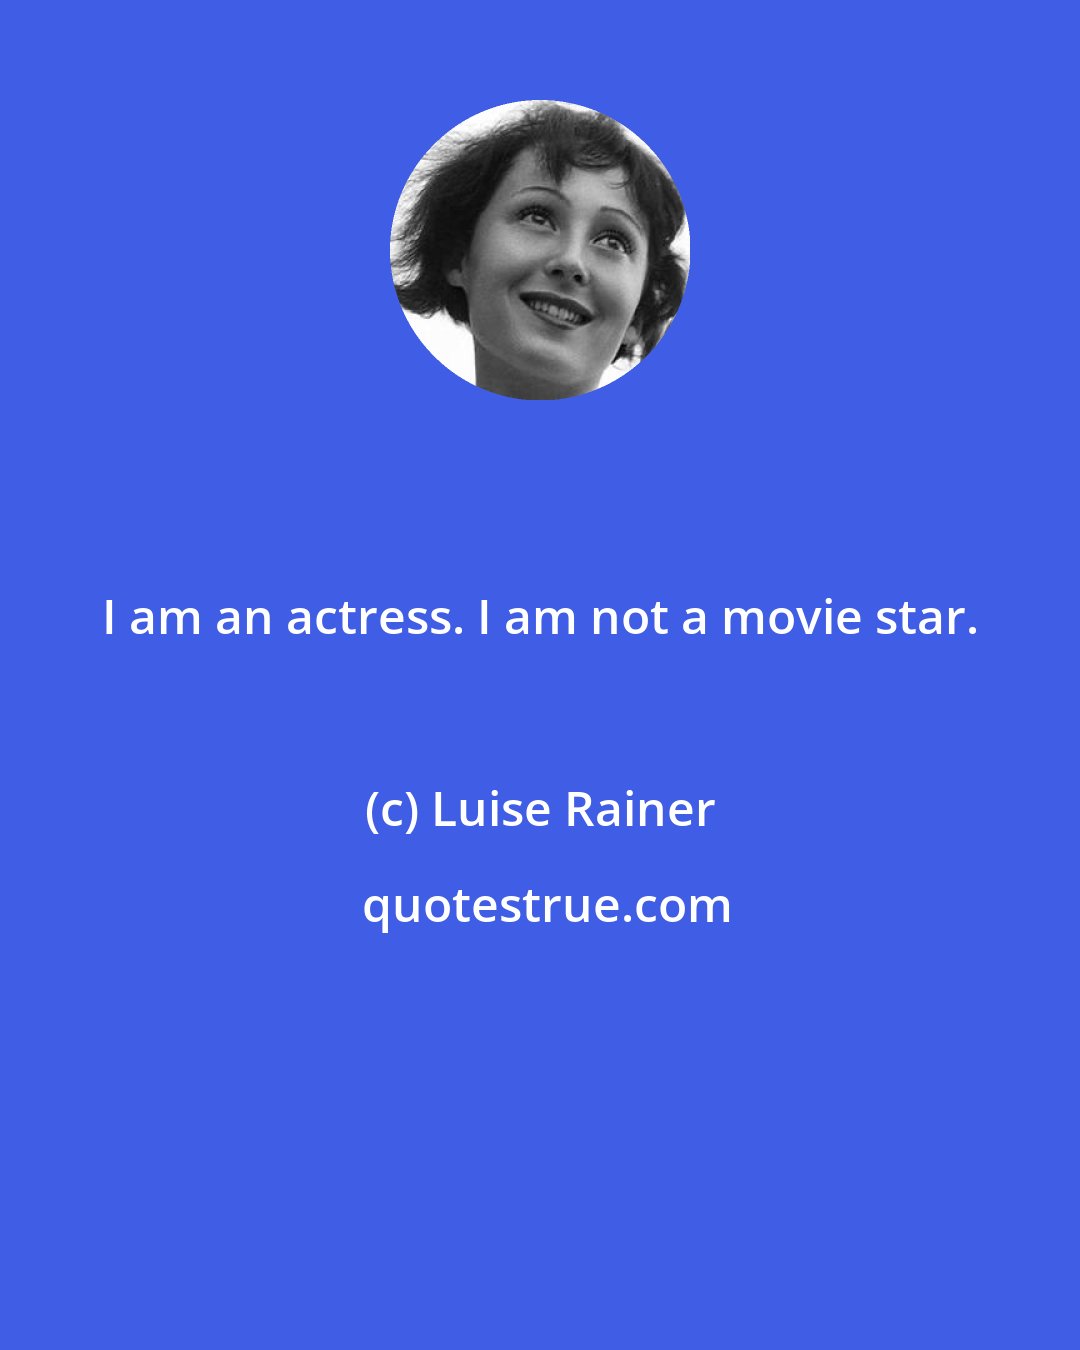 Luise Rainer: I am an actress. I am not a movie star.